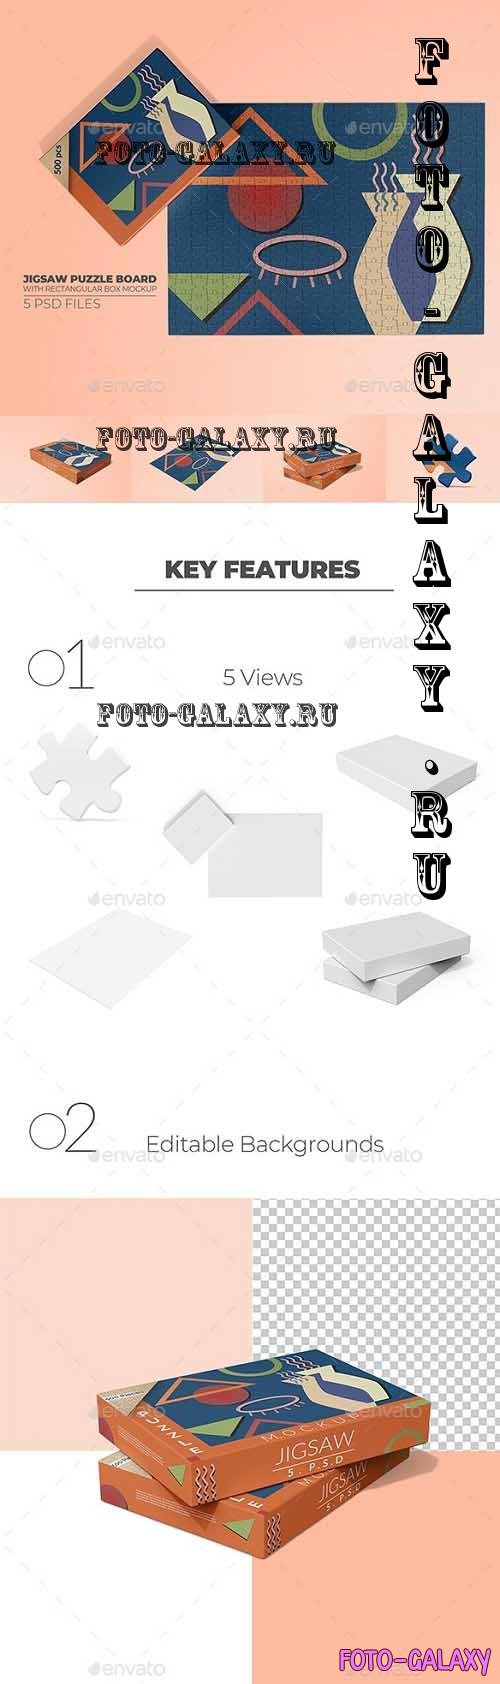 Jigsaw Puzzle Board with Rectangular Box Mockup - 35131680 - 6892174